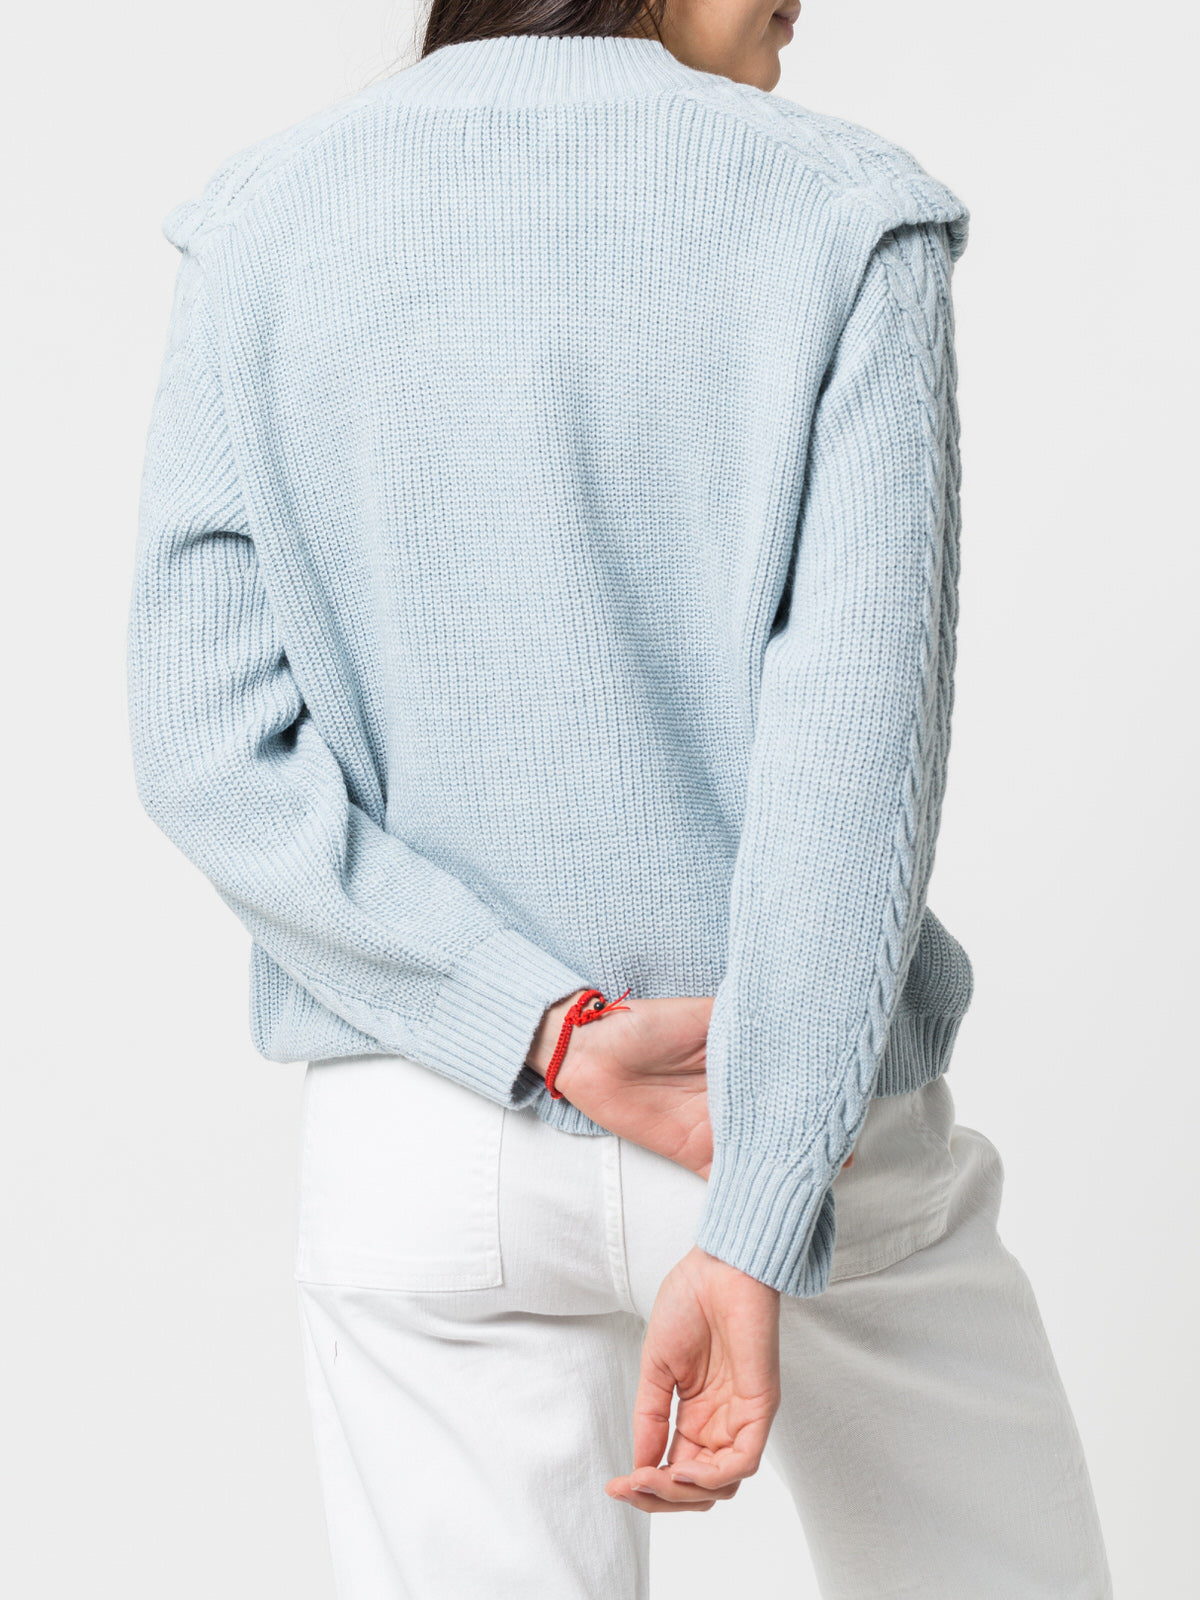 Braided Sweater Sleeve